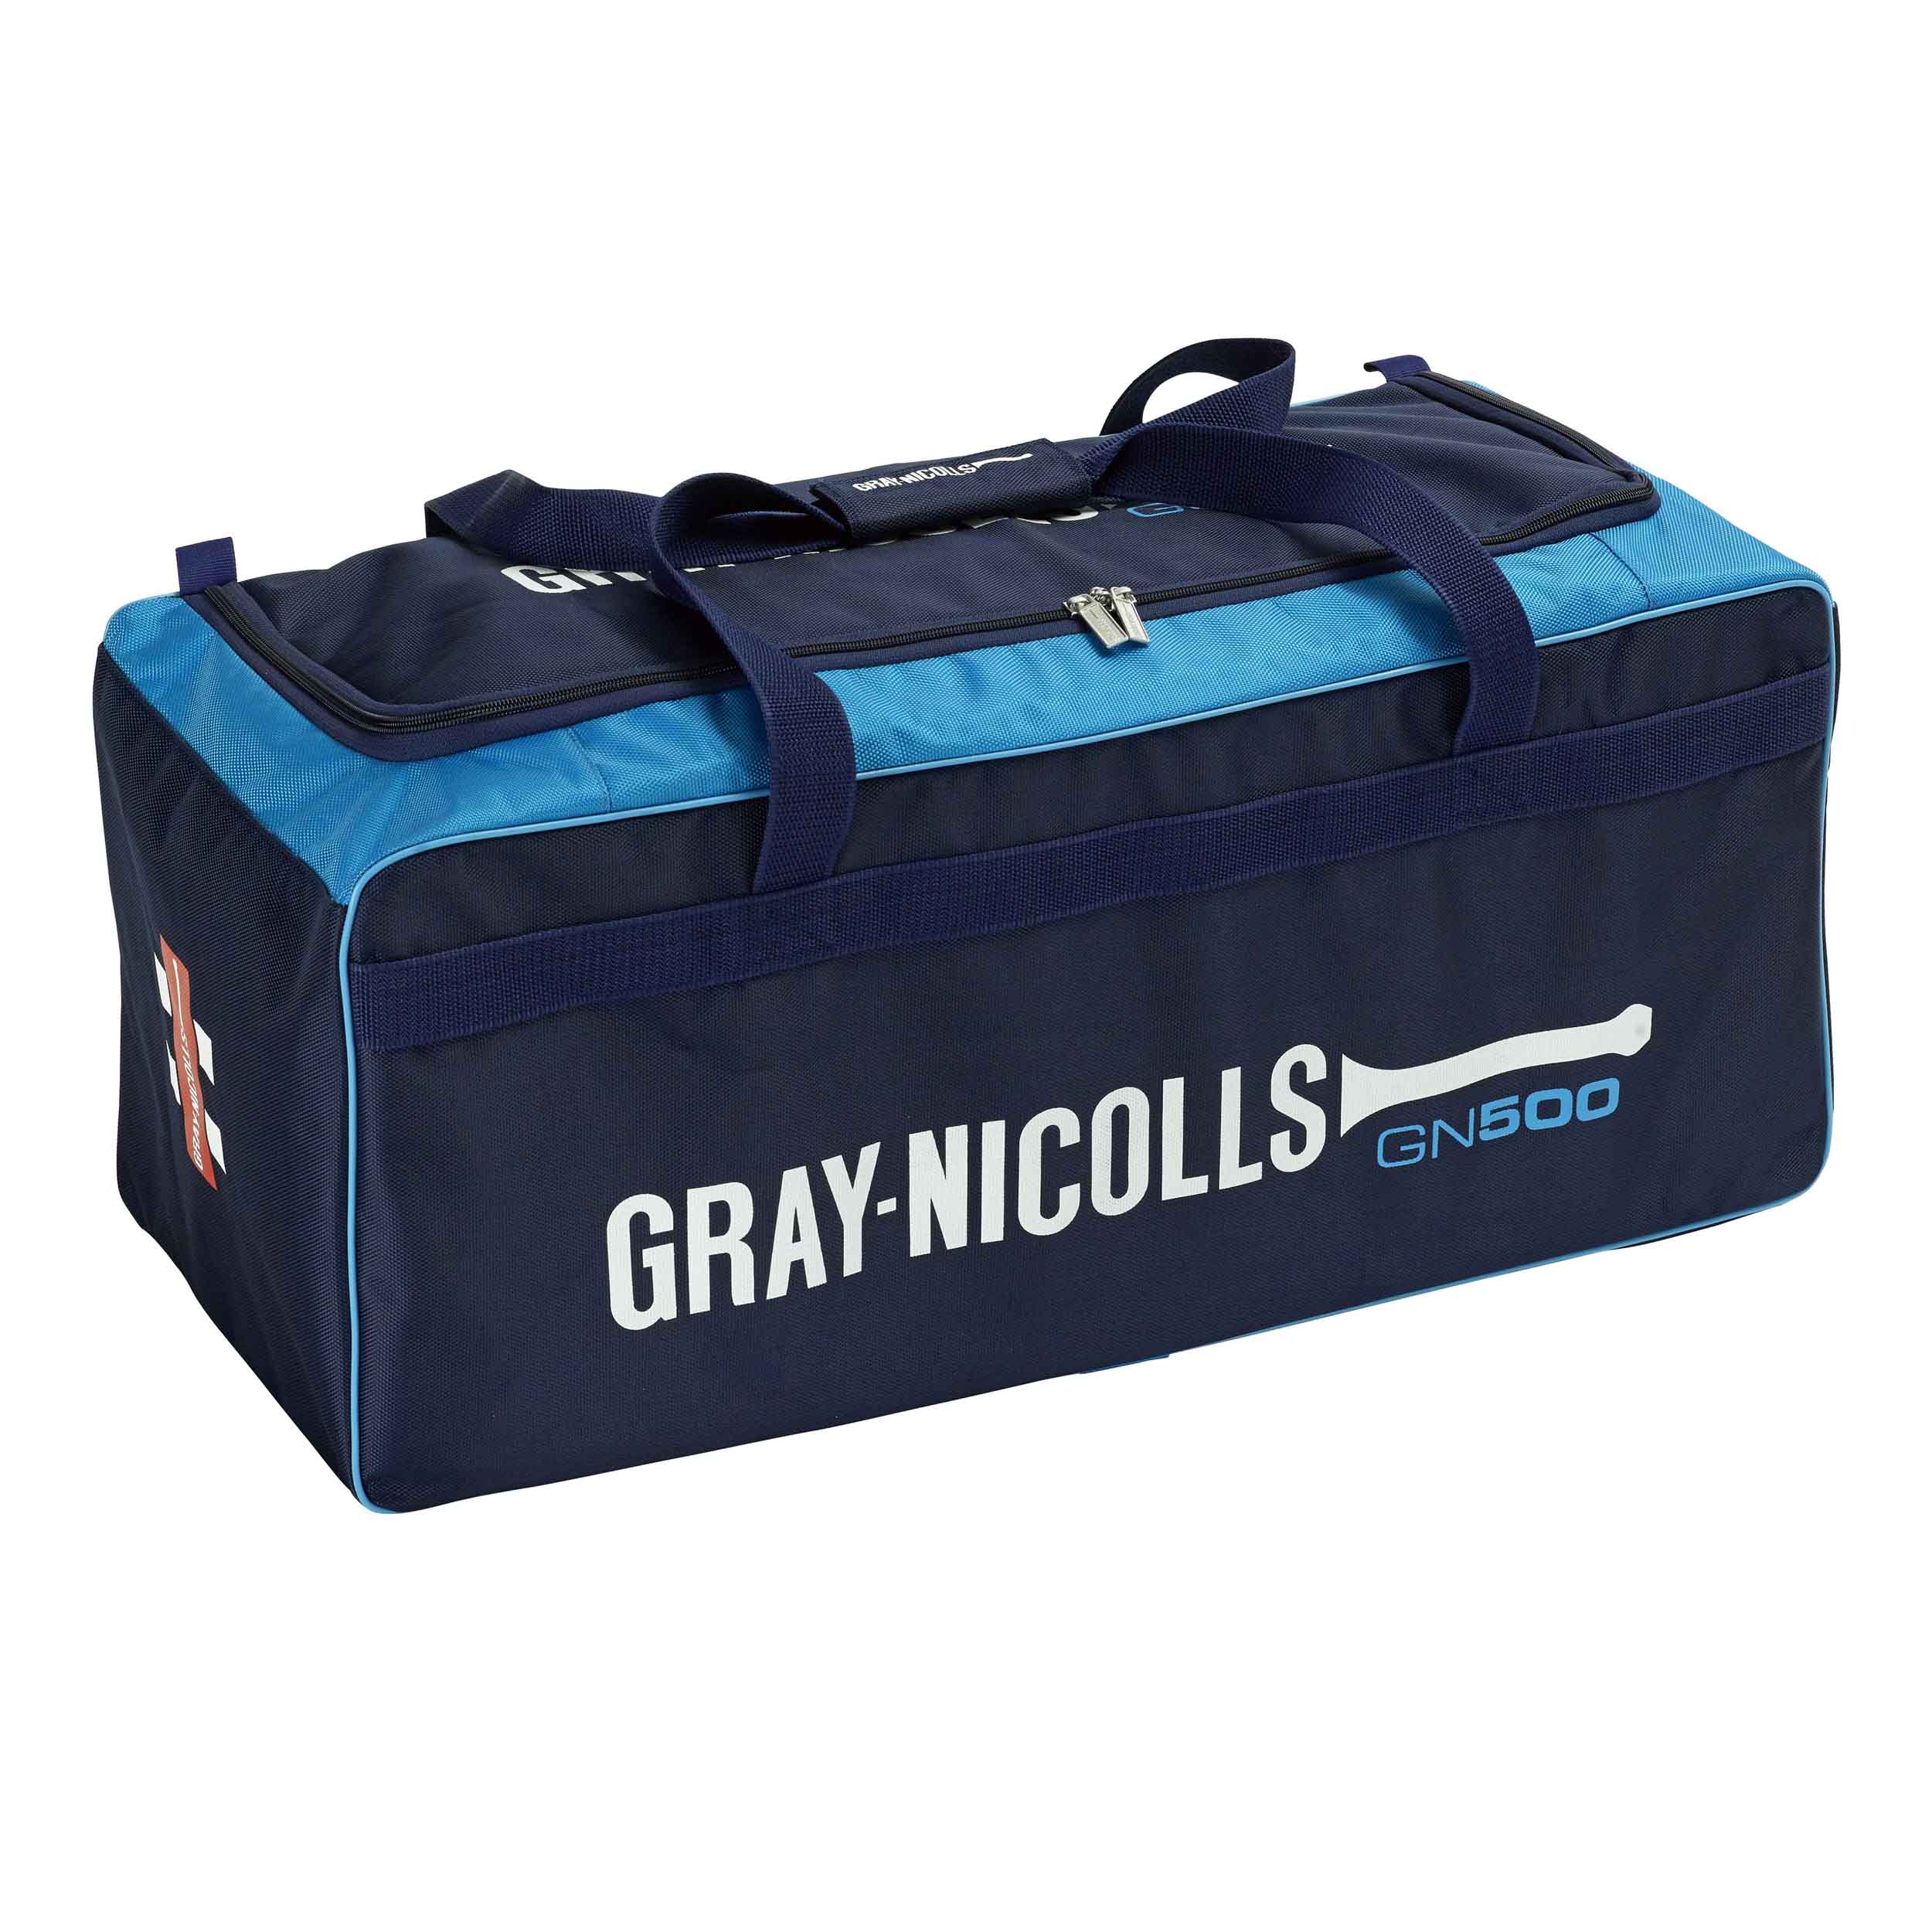 Gray Nicolls GN500 Bag – Blue 21620